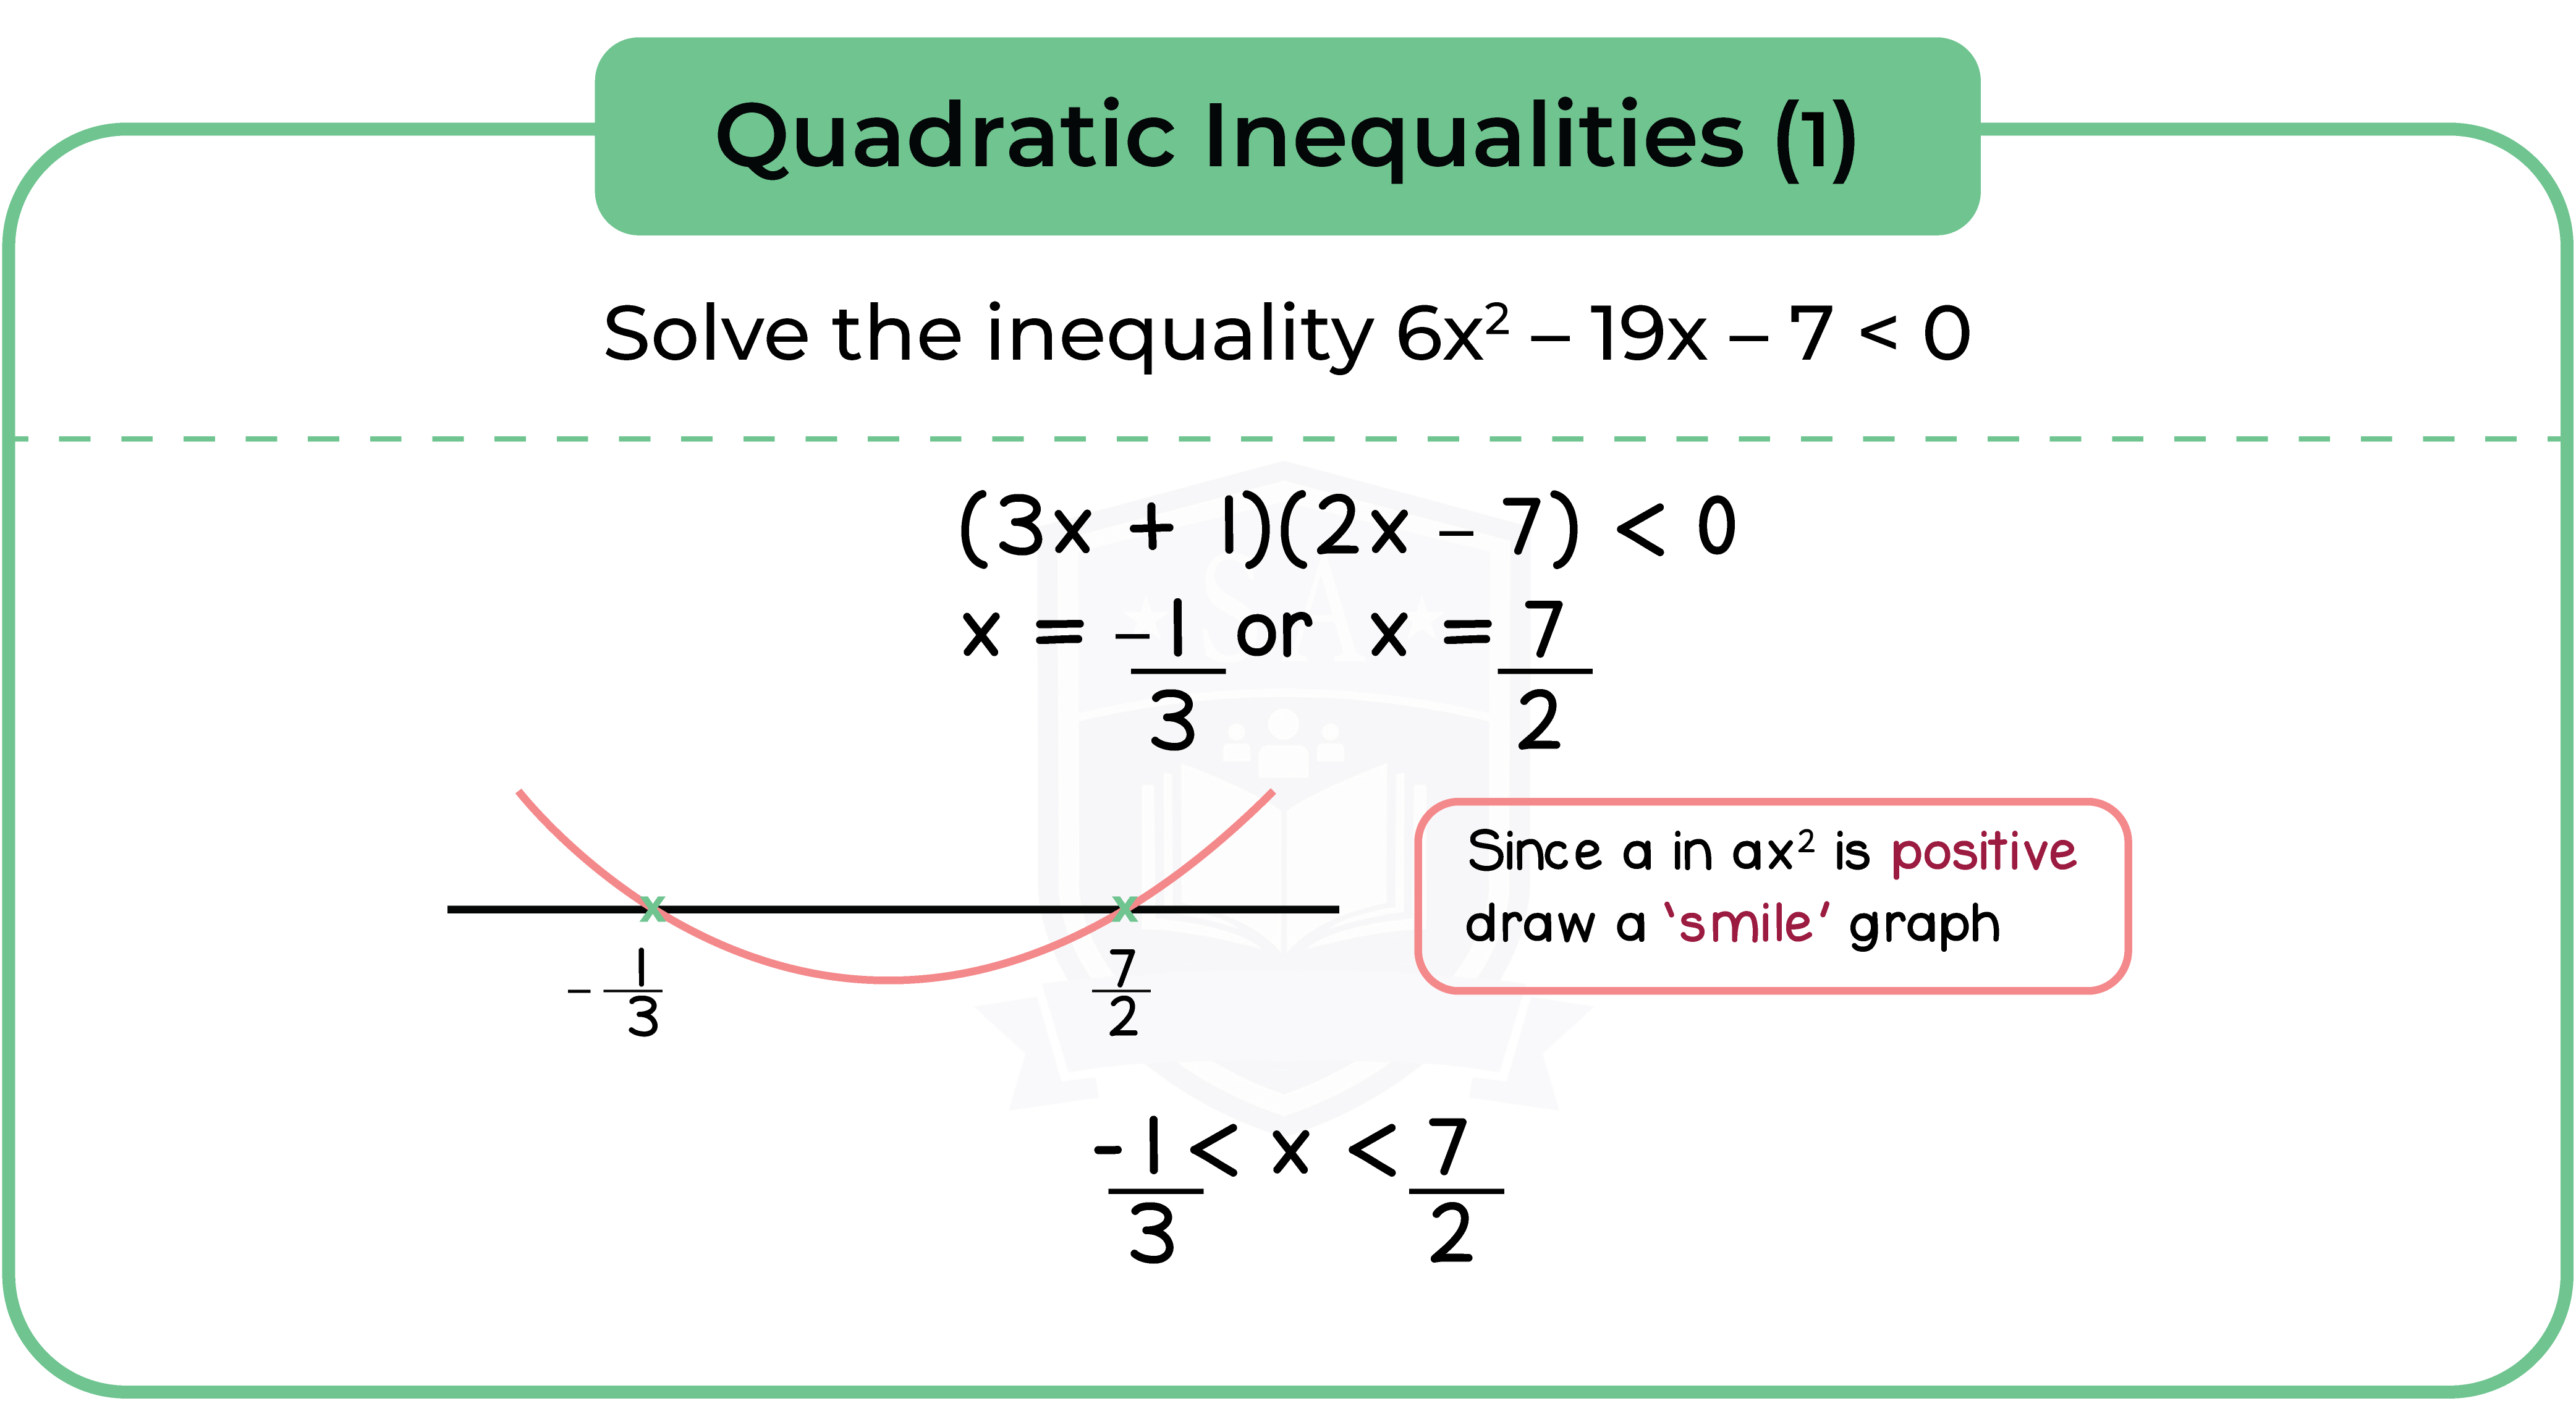 edexcel_igcse_mathematics a_topic 19_inequalities_005_Quadratic inequalities